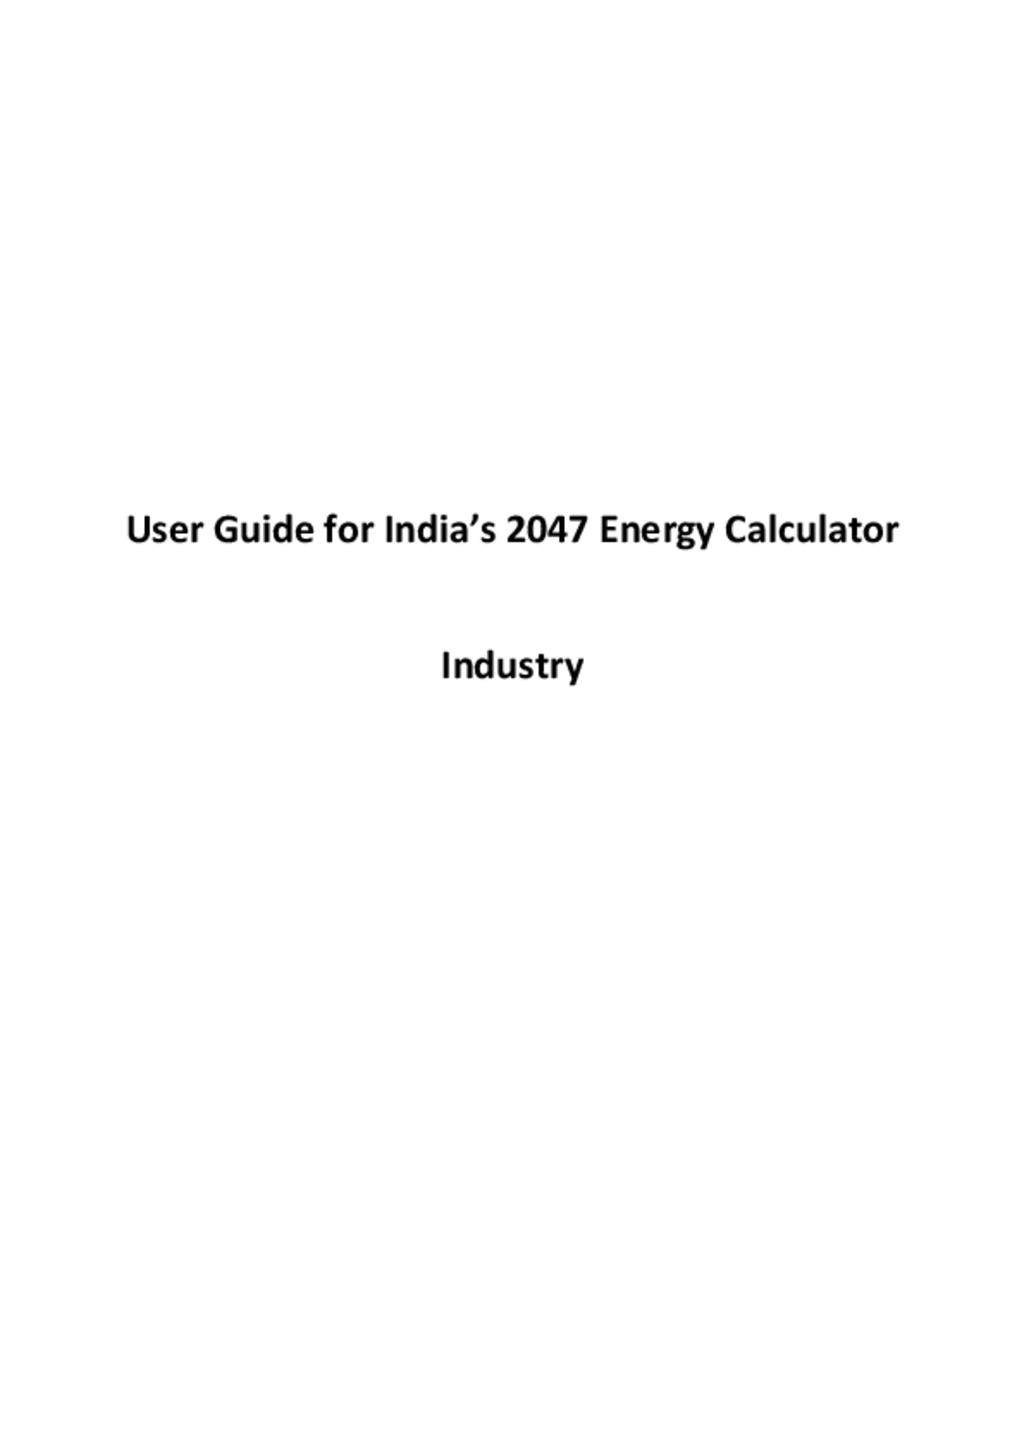 Energy Calculator Industry